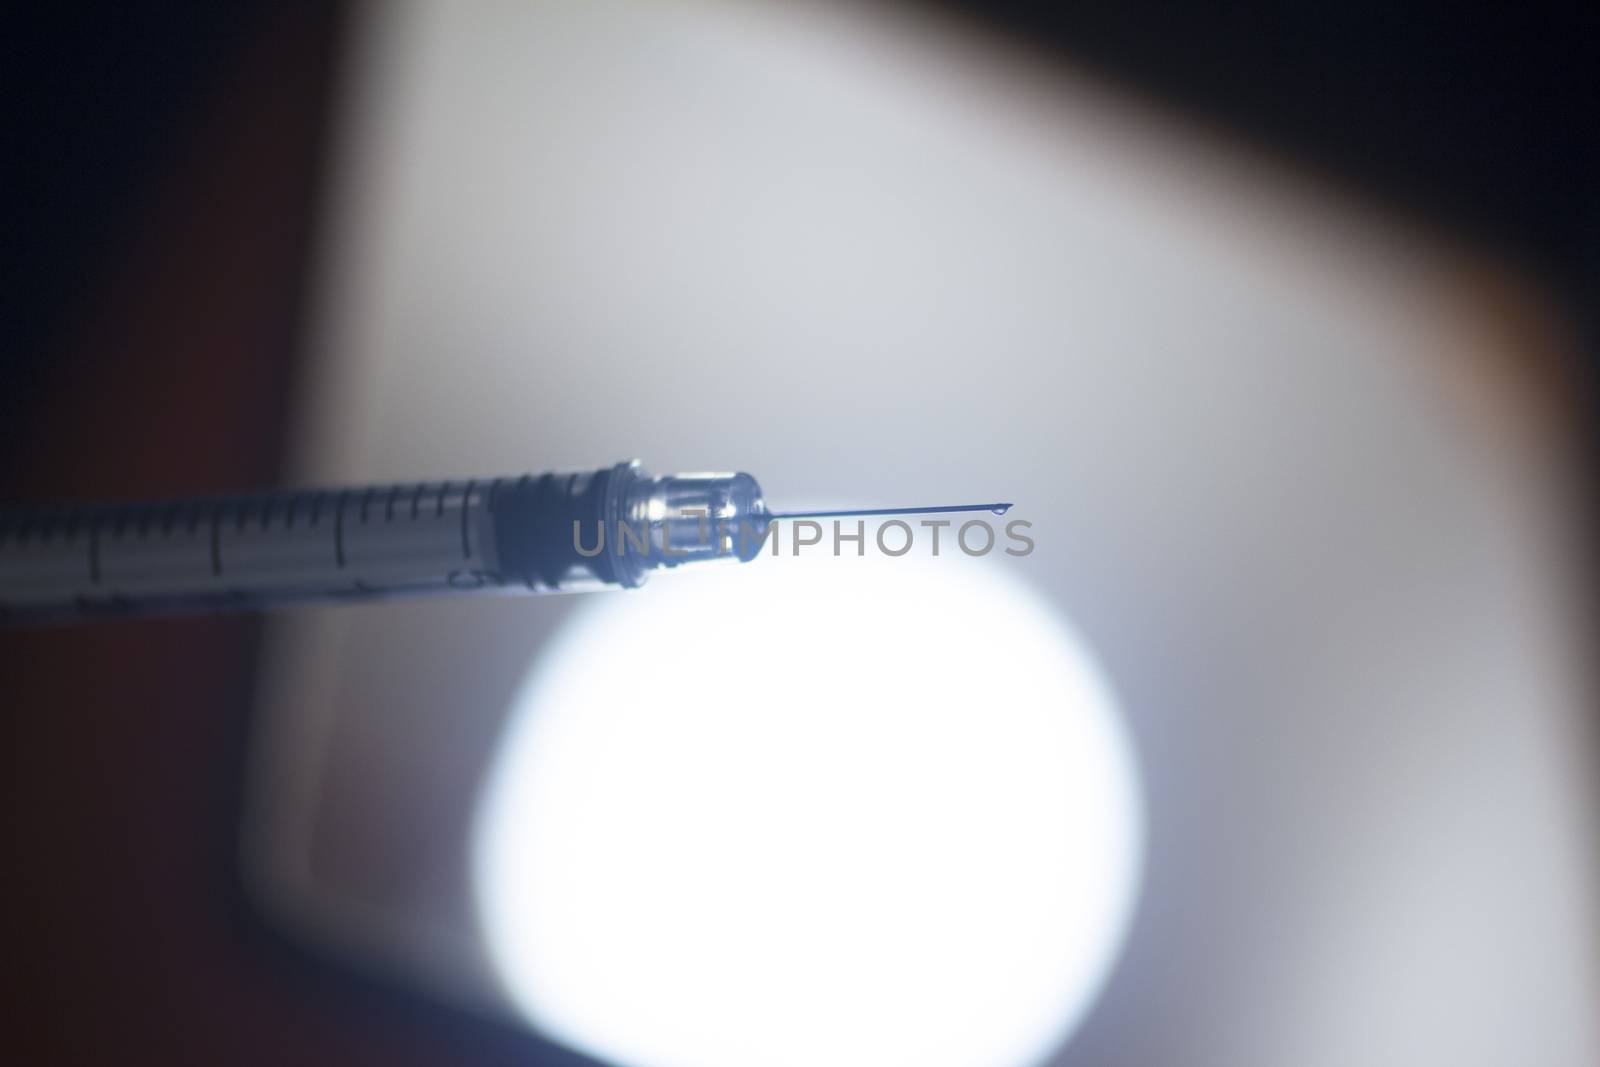 Pet insulin injection syringe by edwardolive